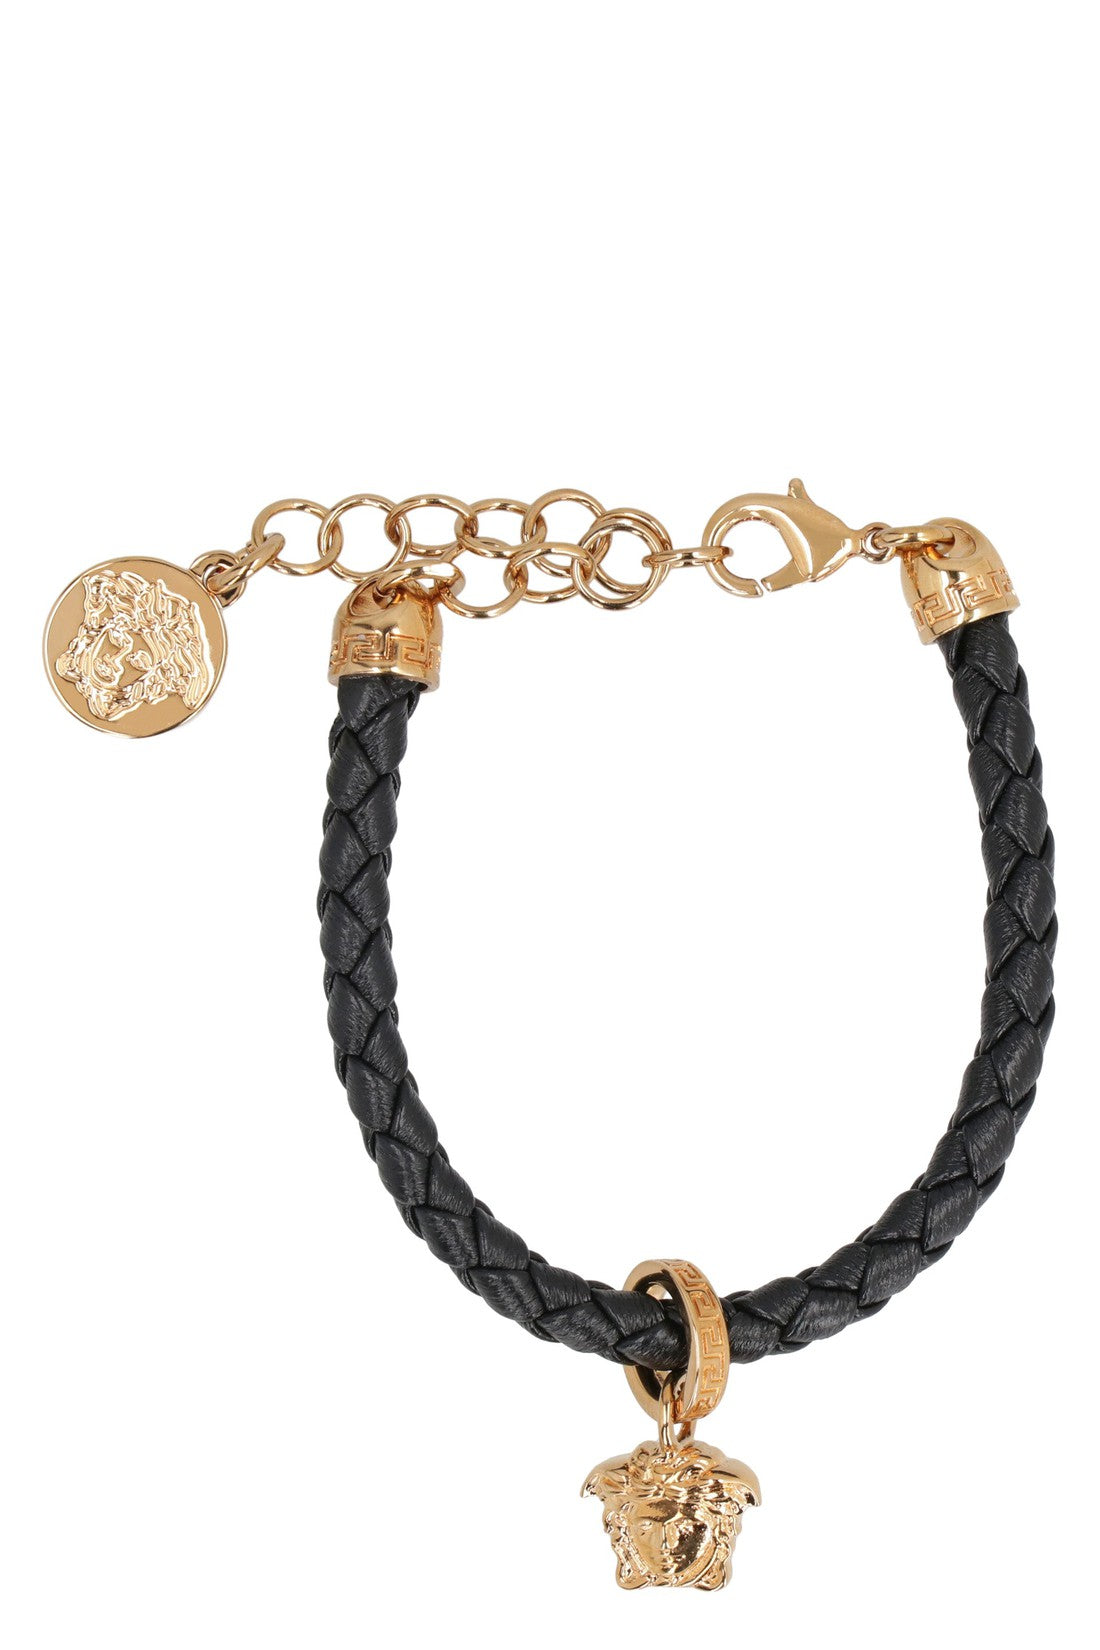 Versace-OUTLET-SALE-Braided leather bracelet-ARCHIVIST